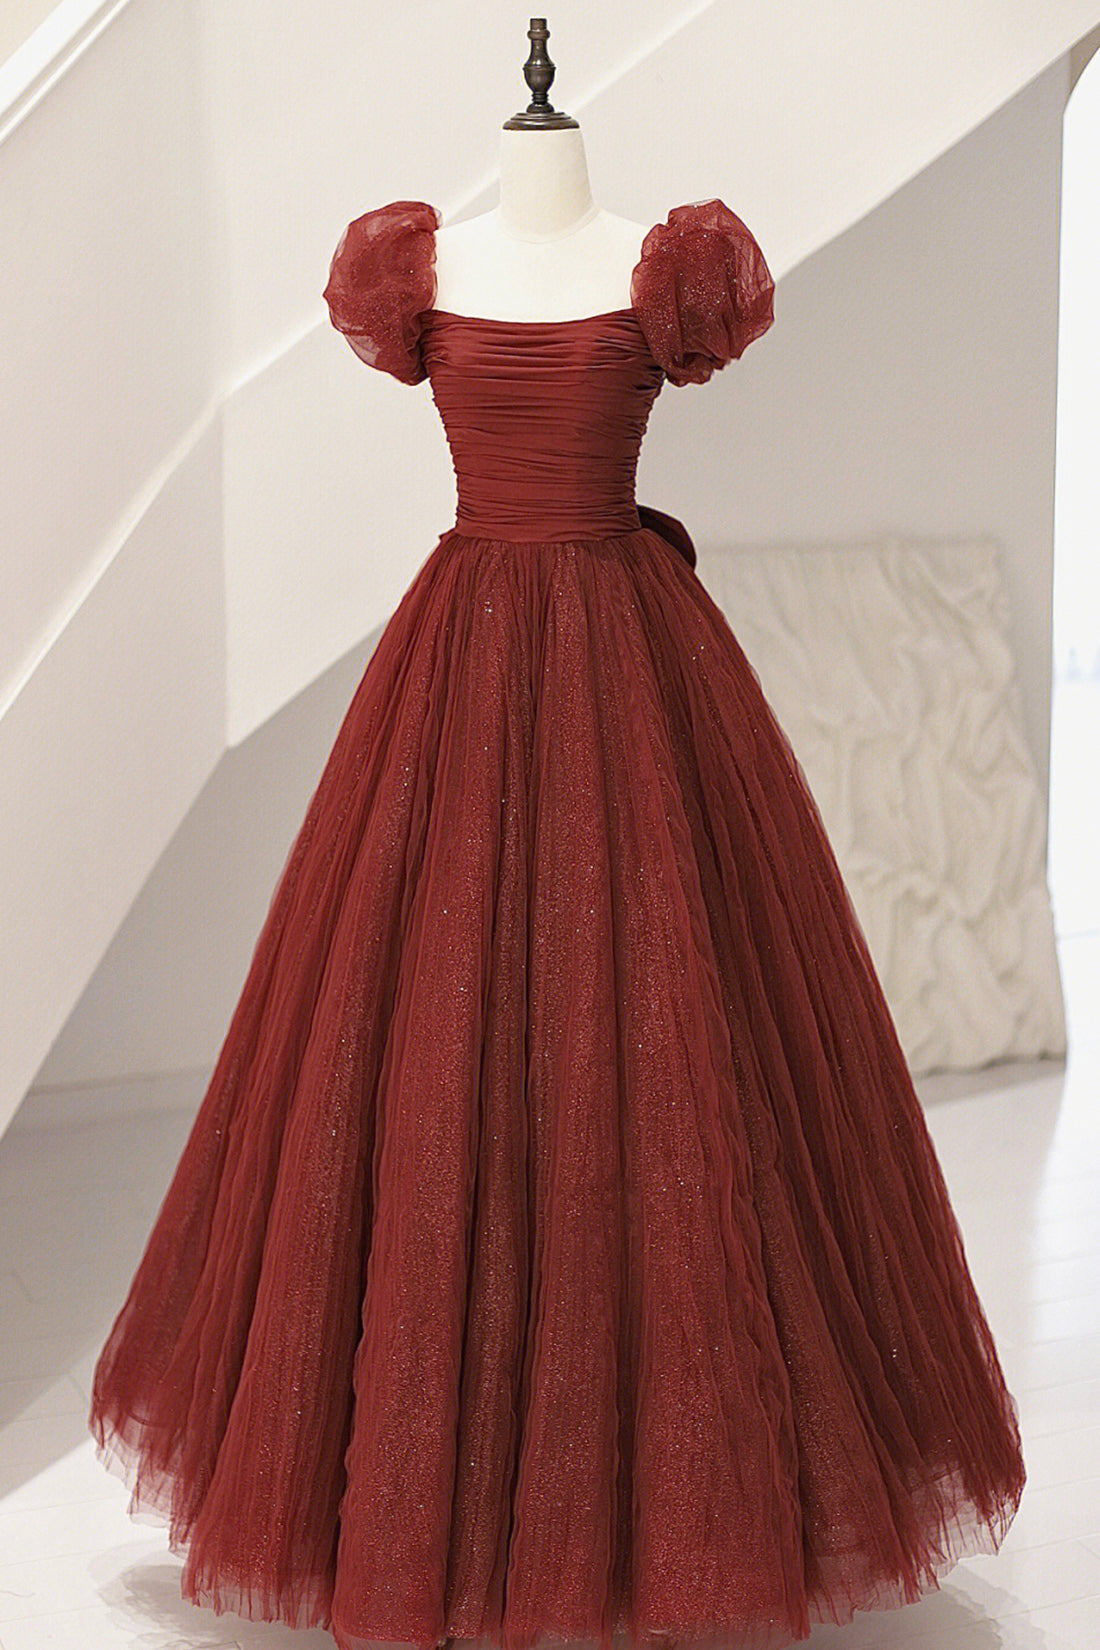 Burgundy Tulle Long A-Line Corset Prom Dress, Cute Short Sleeve Evening Dress outfit, Wedding Ideas